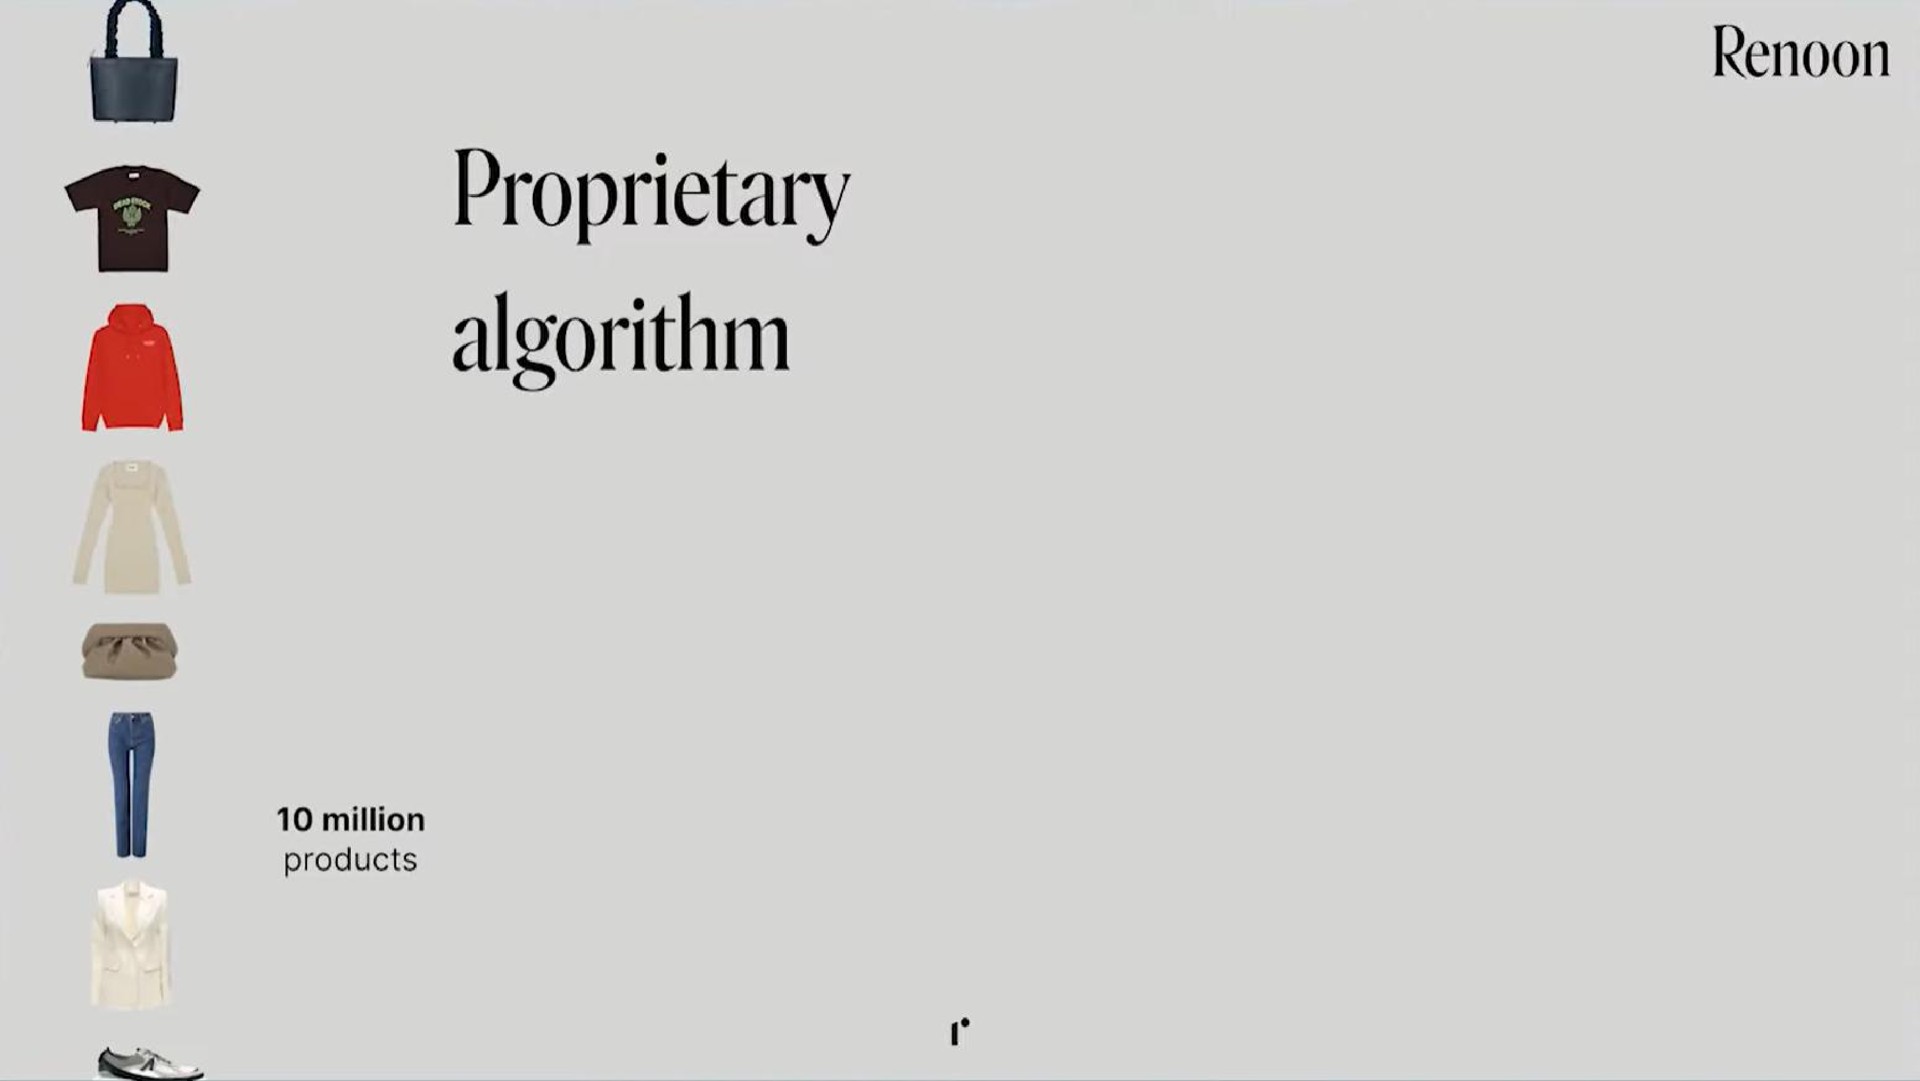 a proprietary algorithm | Renoon